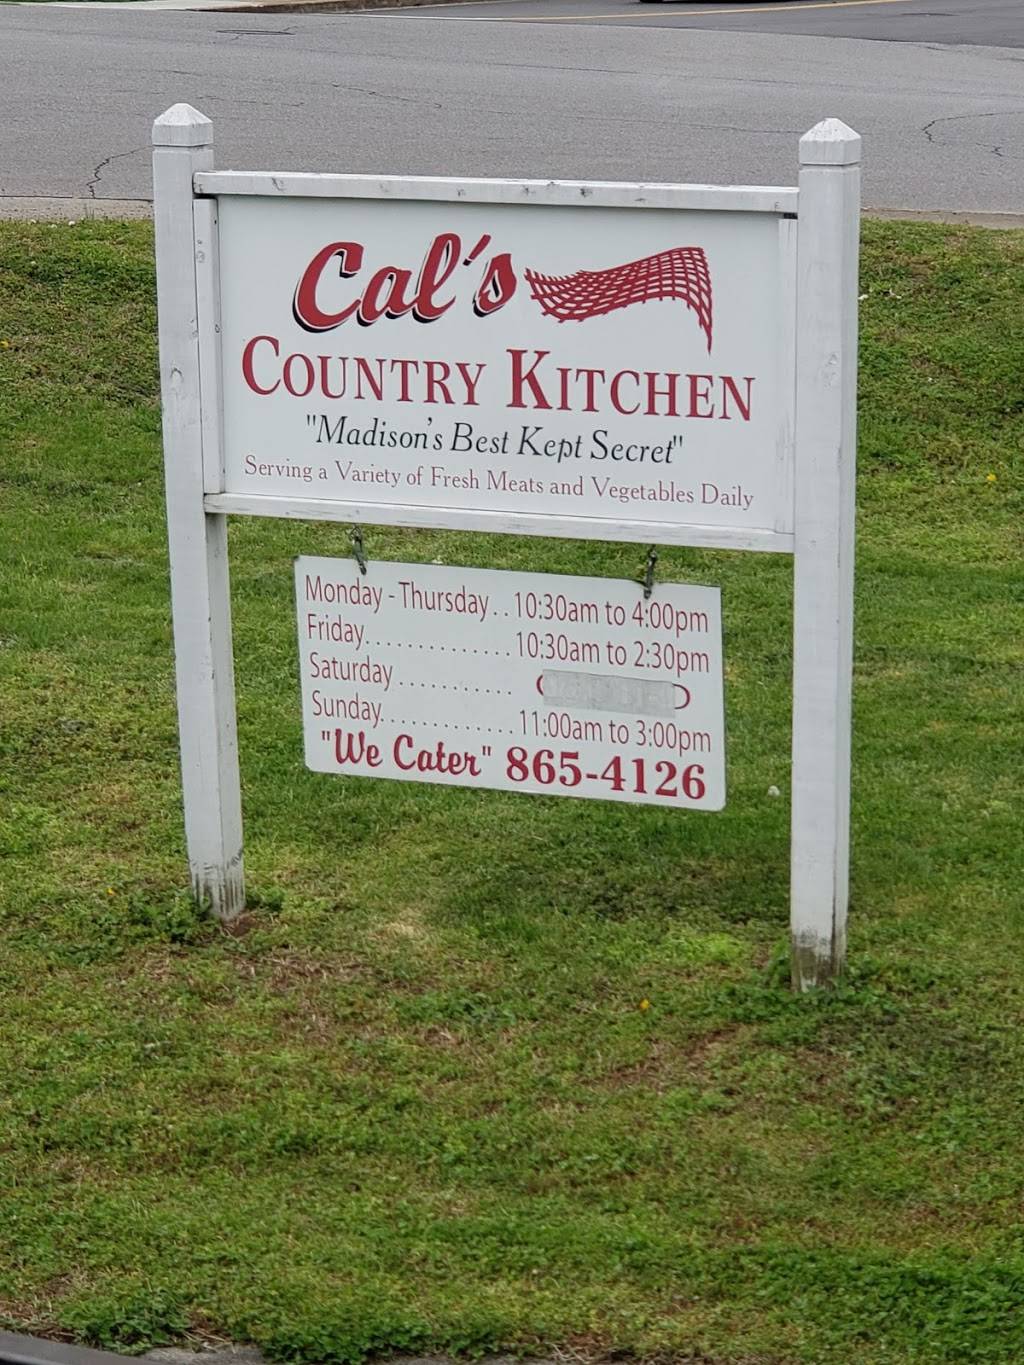 Cals Country Kitchen | 222 Woodruff St, Madison, TN 37115 | Phone: (615) 865-4126